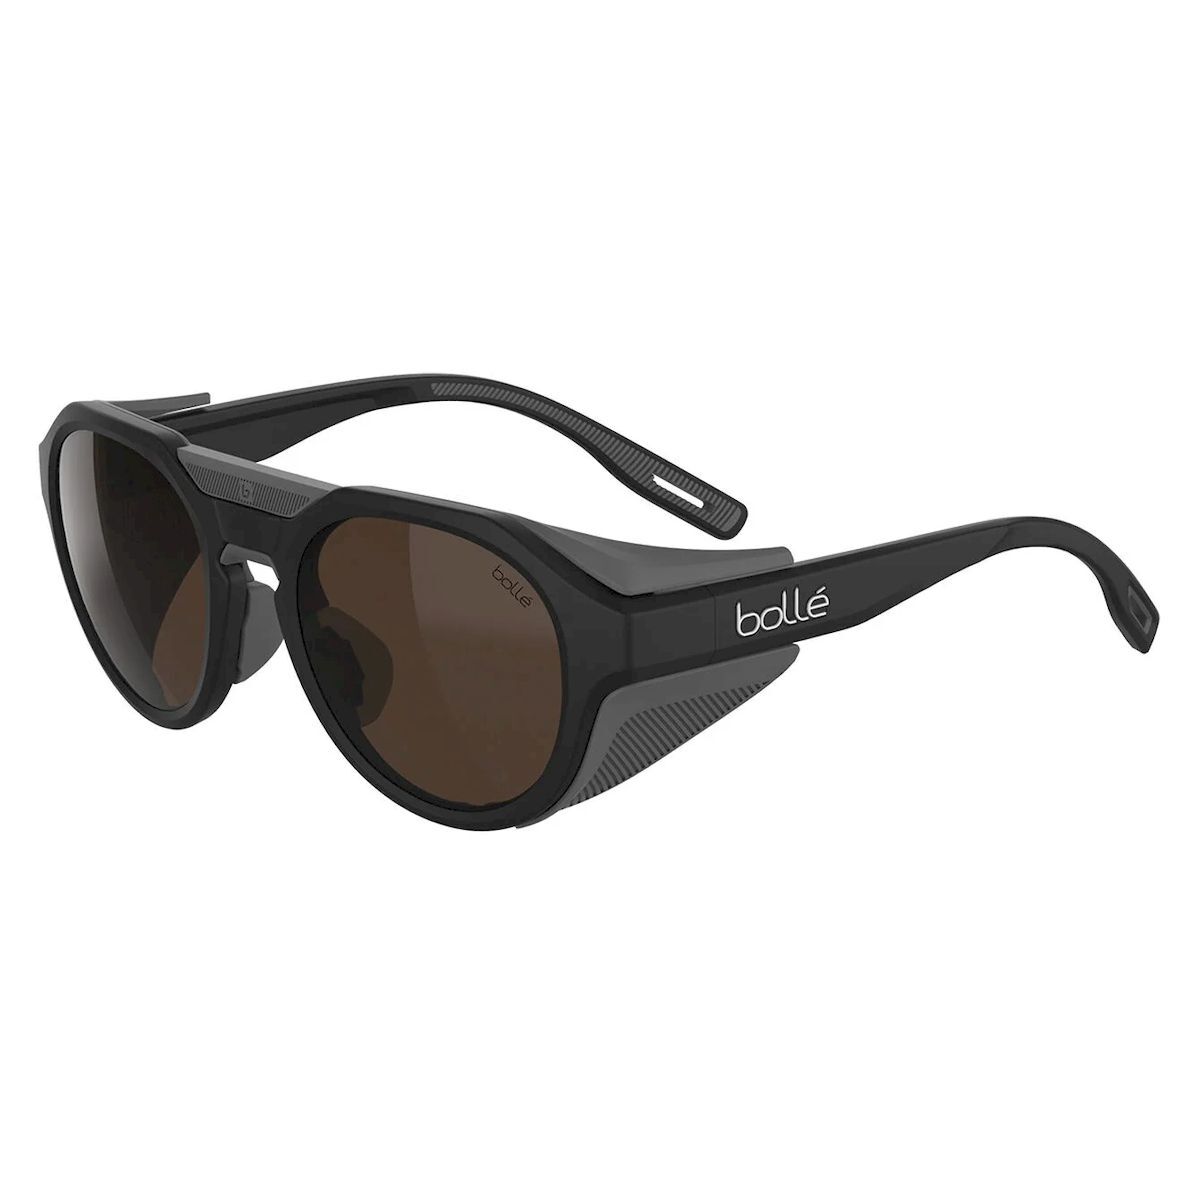 Bollé Ascender - Sunglasses